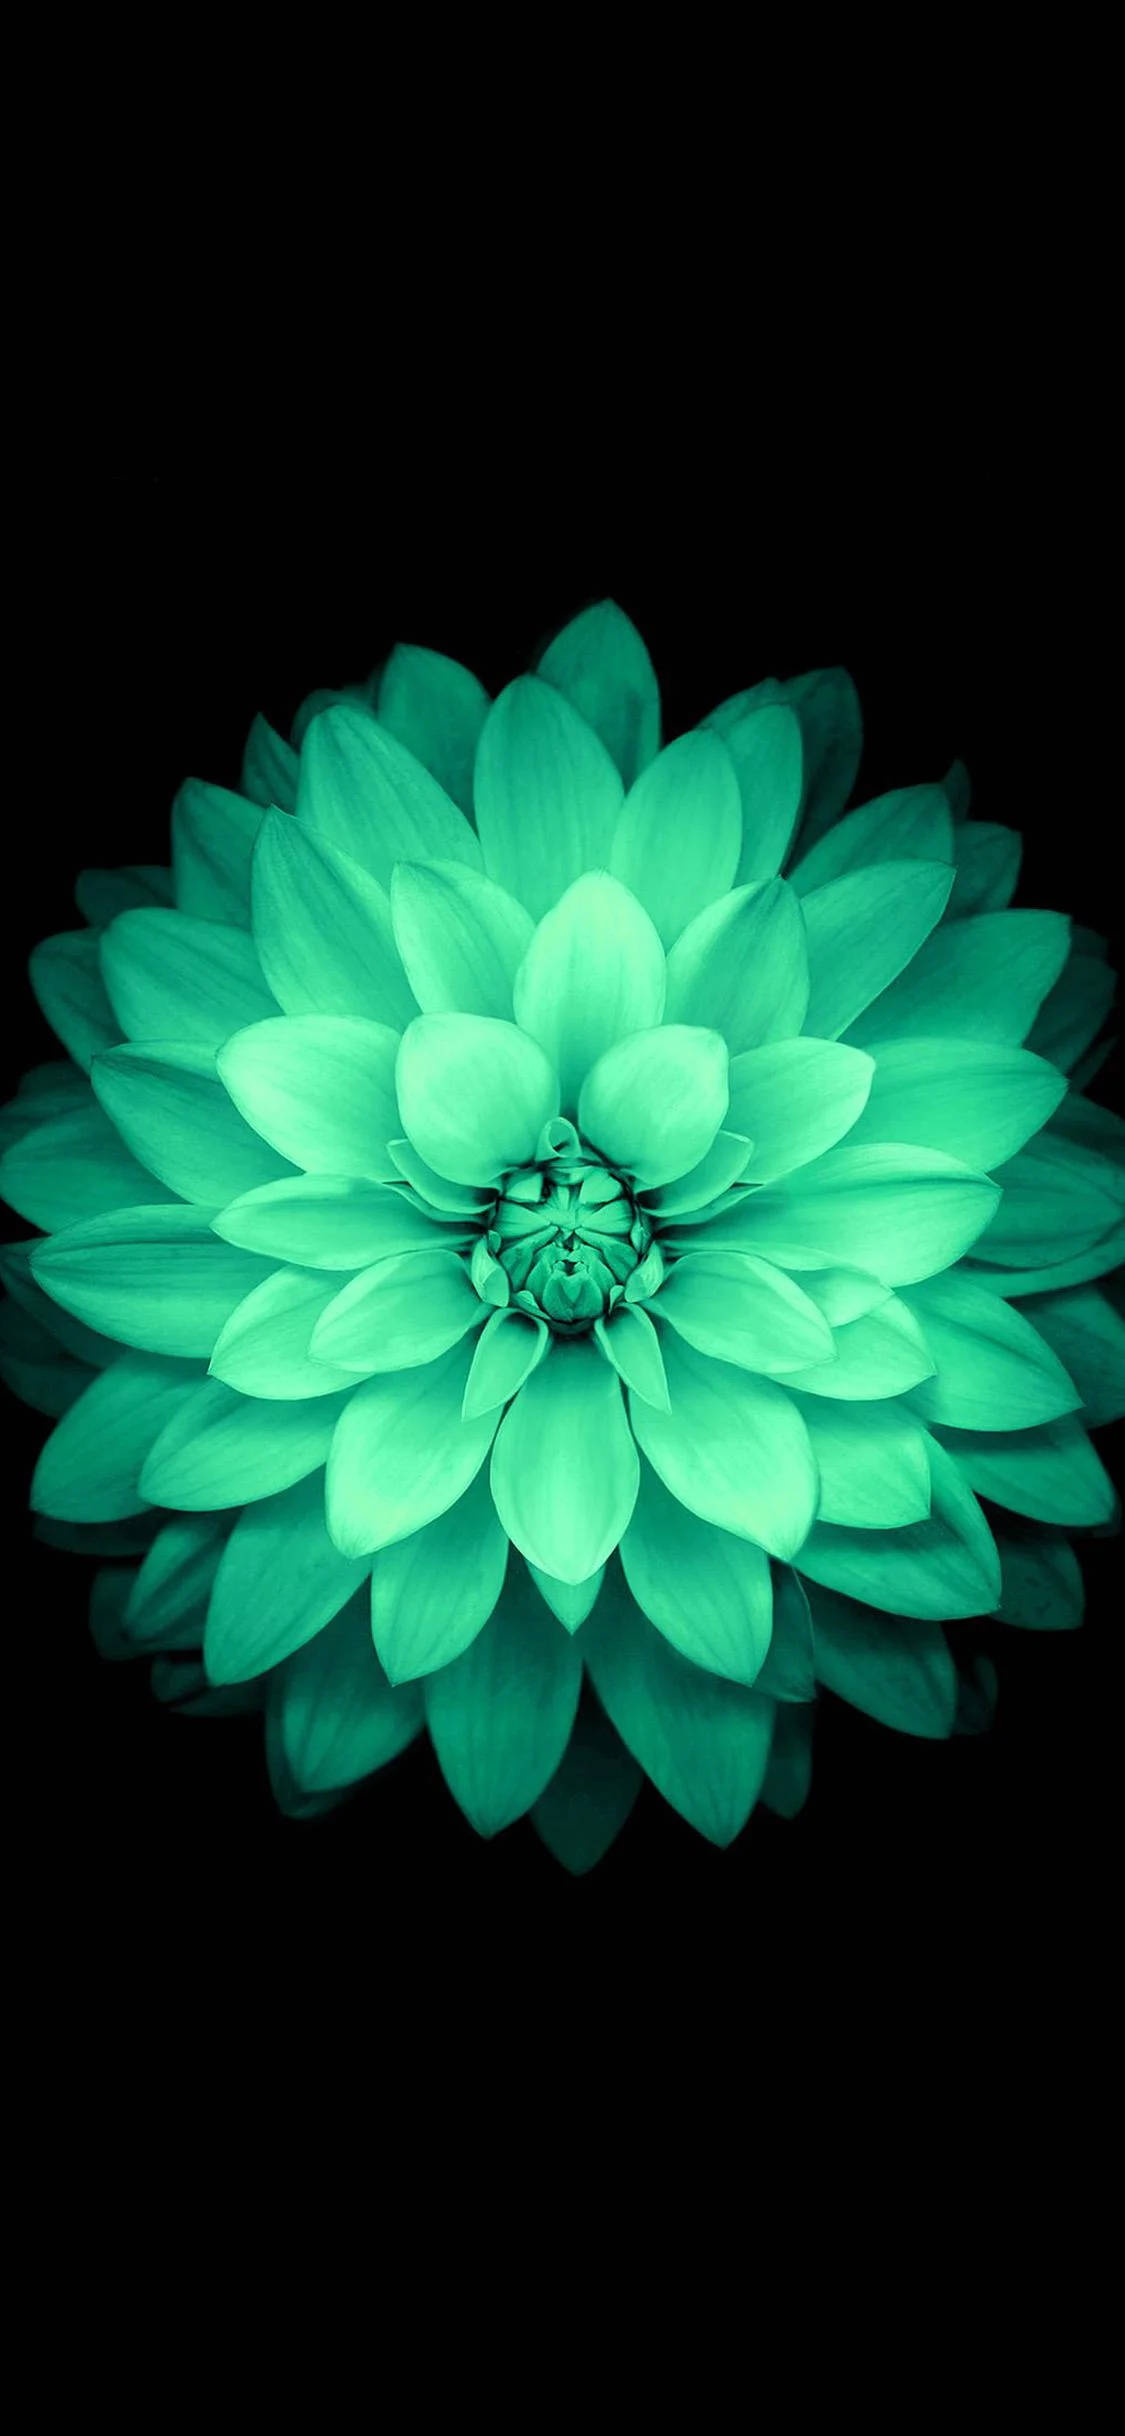 Download Beautiful Green Lotus Apple Flower Wallpaper | Wallpapers.com